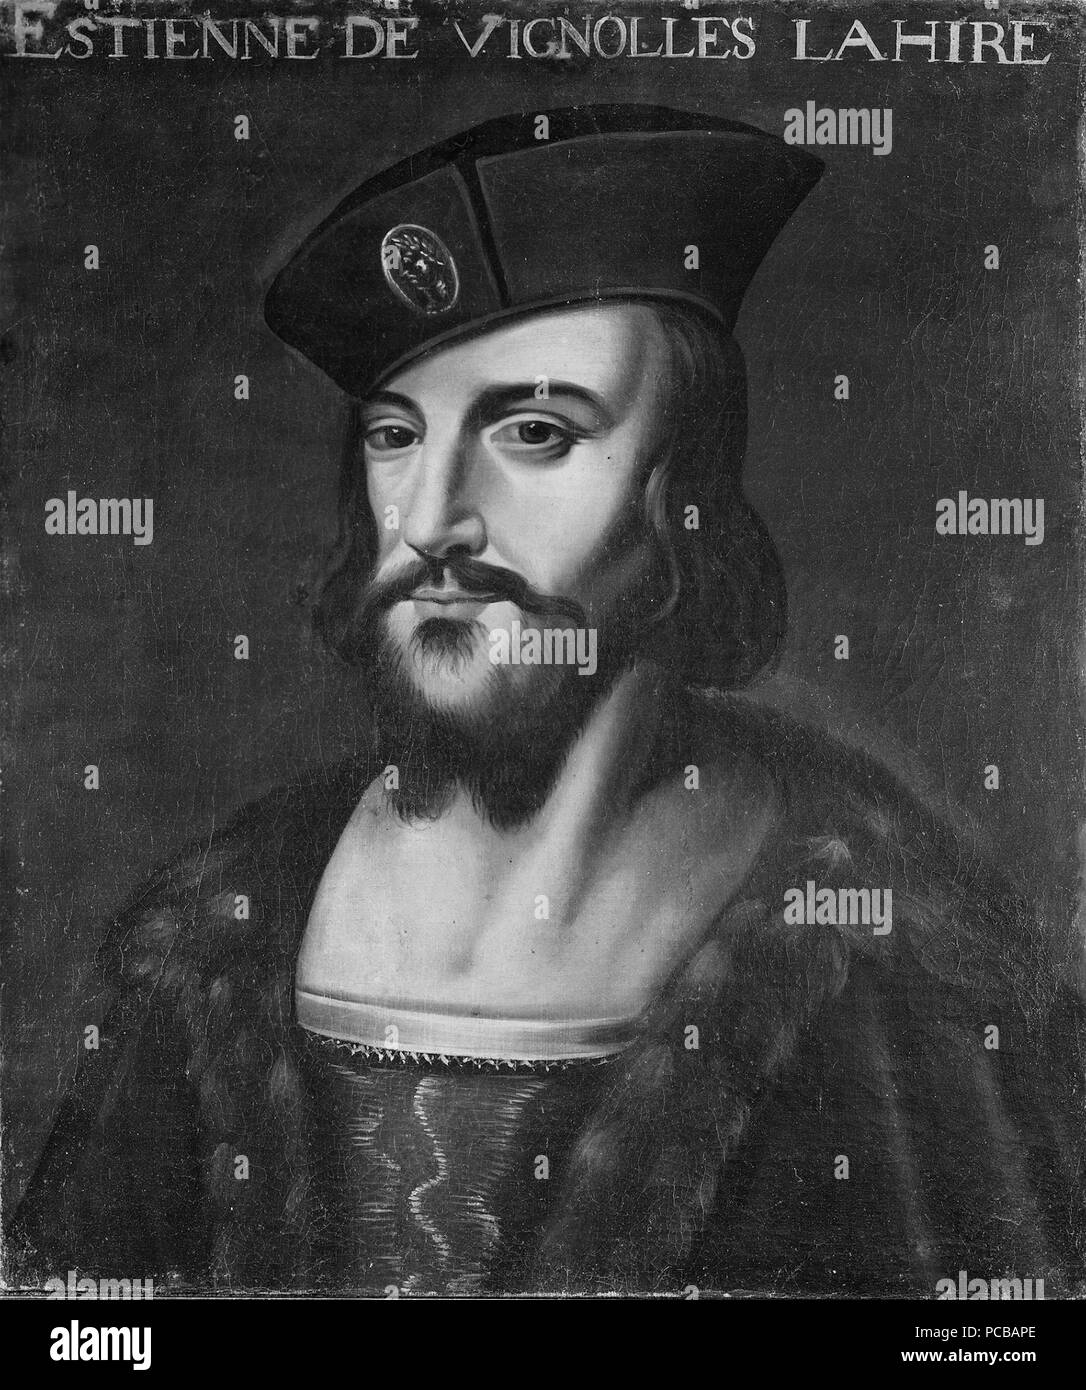 357 Lahire, egentligen Etienne de Vignolles, ca 1390-1443, härförare hos konung Karl II - Nationalmuseum - 39409 Stock Photo